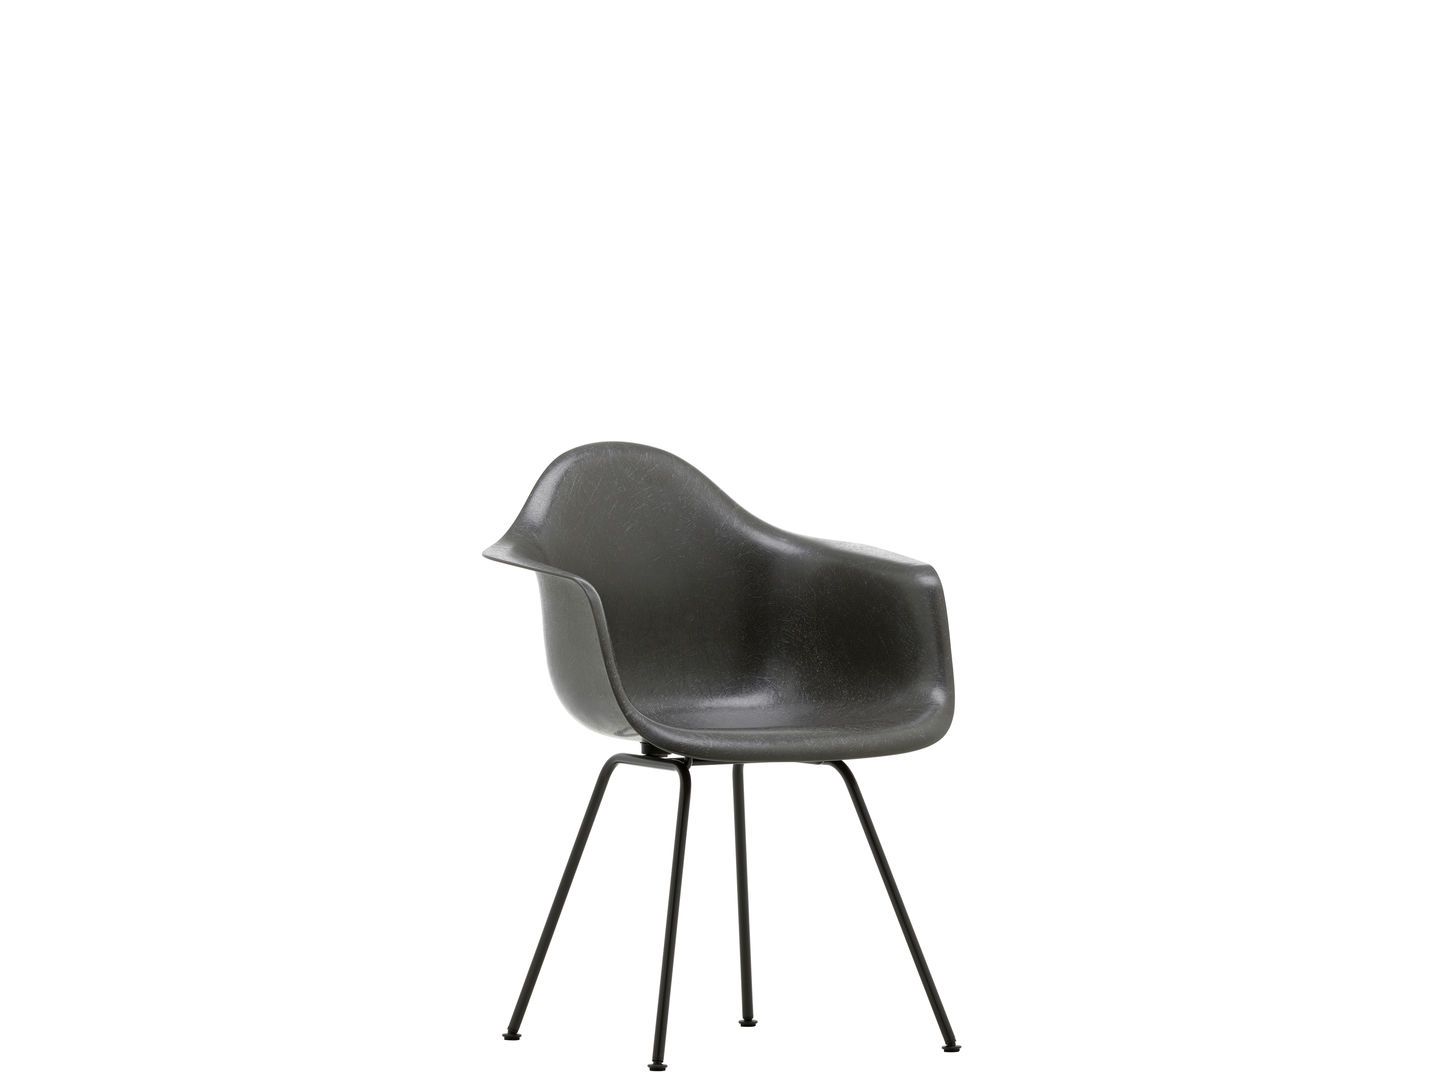 Eames Fiberglass Armchair DAX | One52 Furniture 